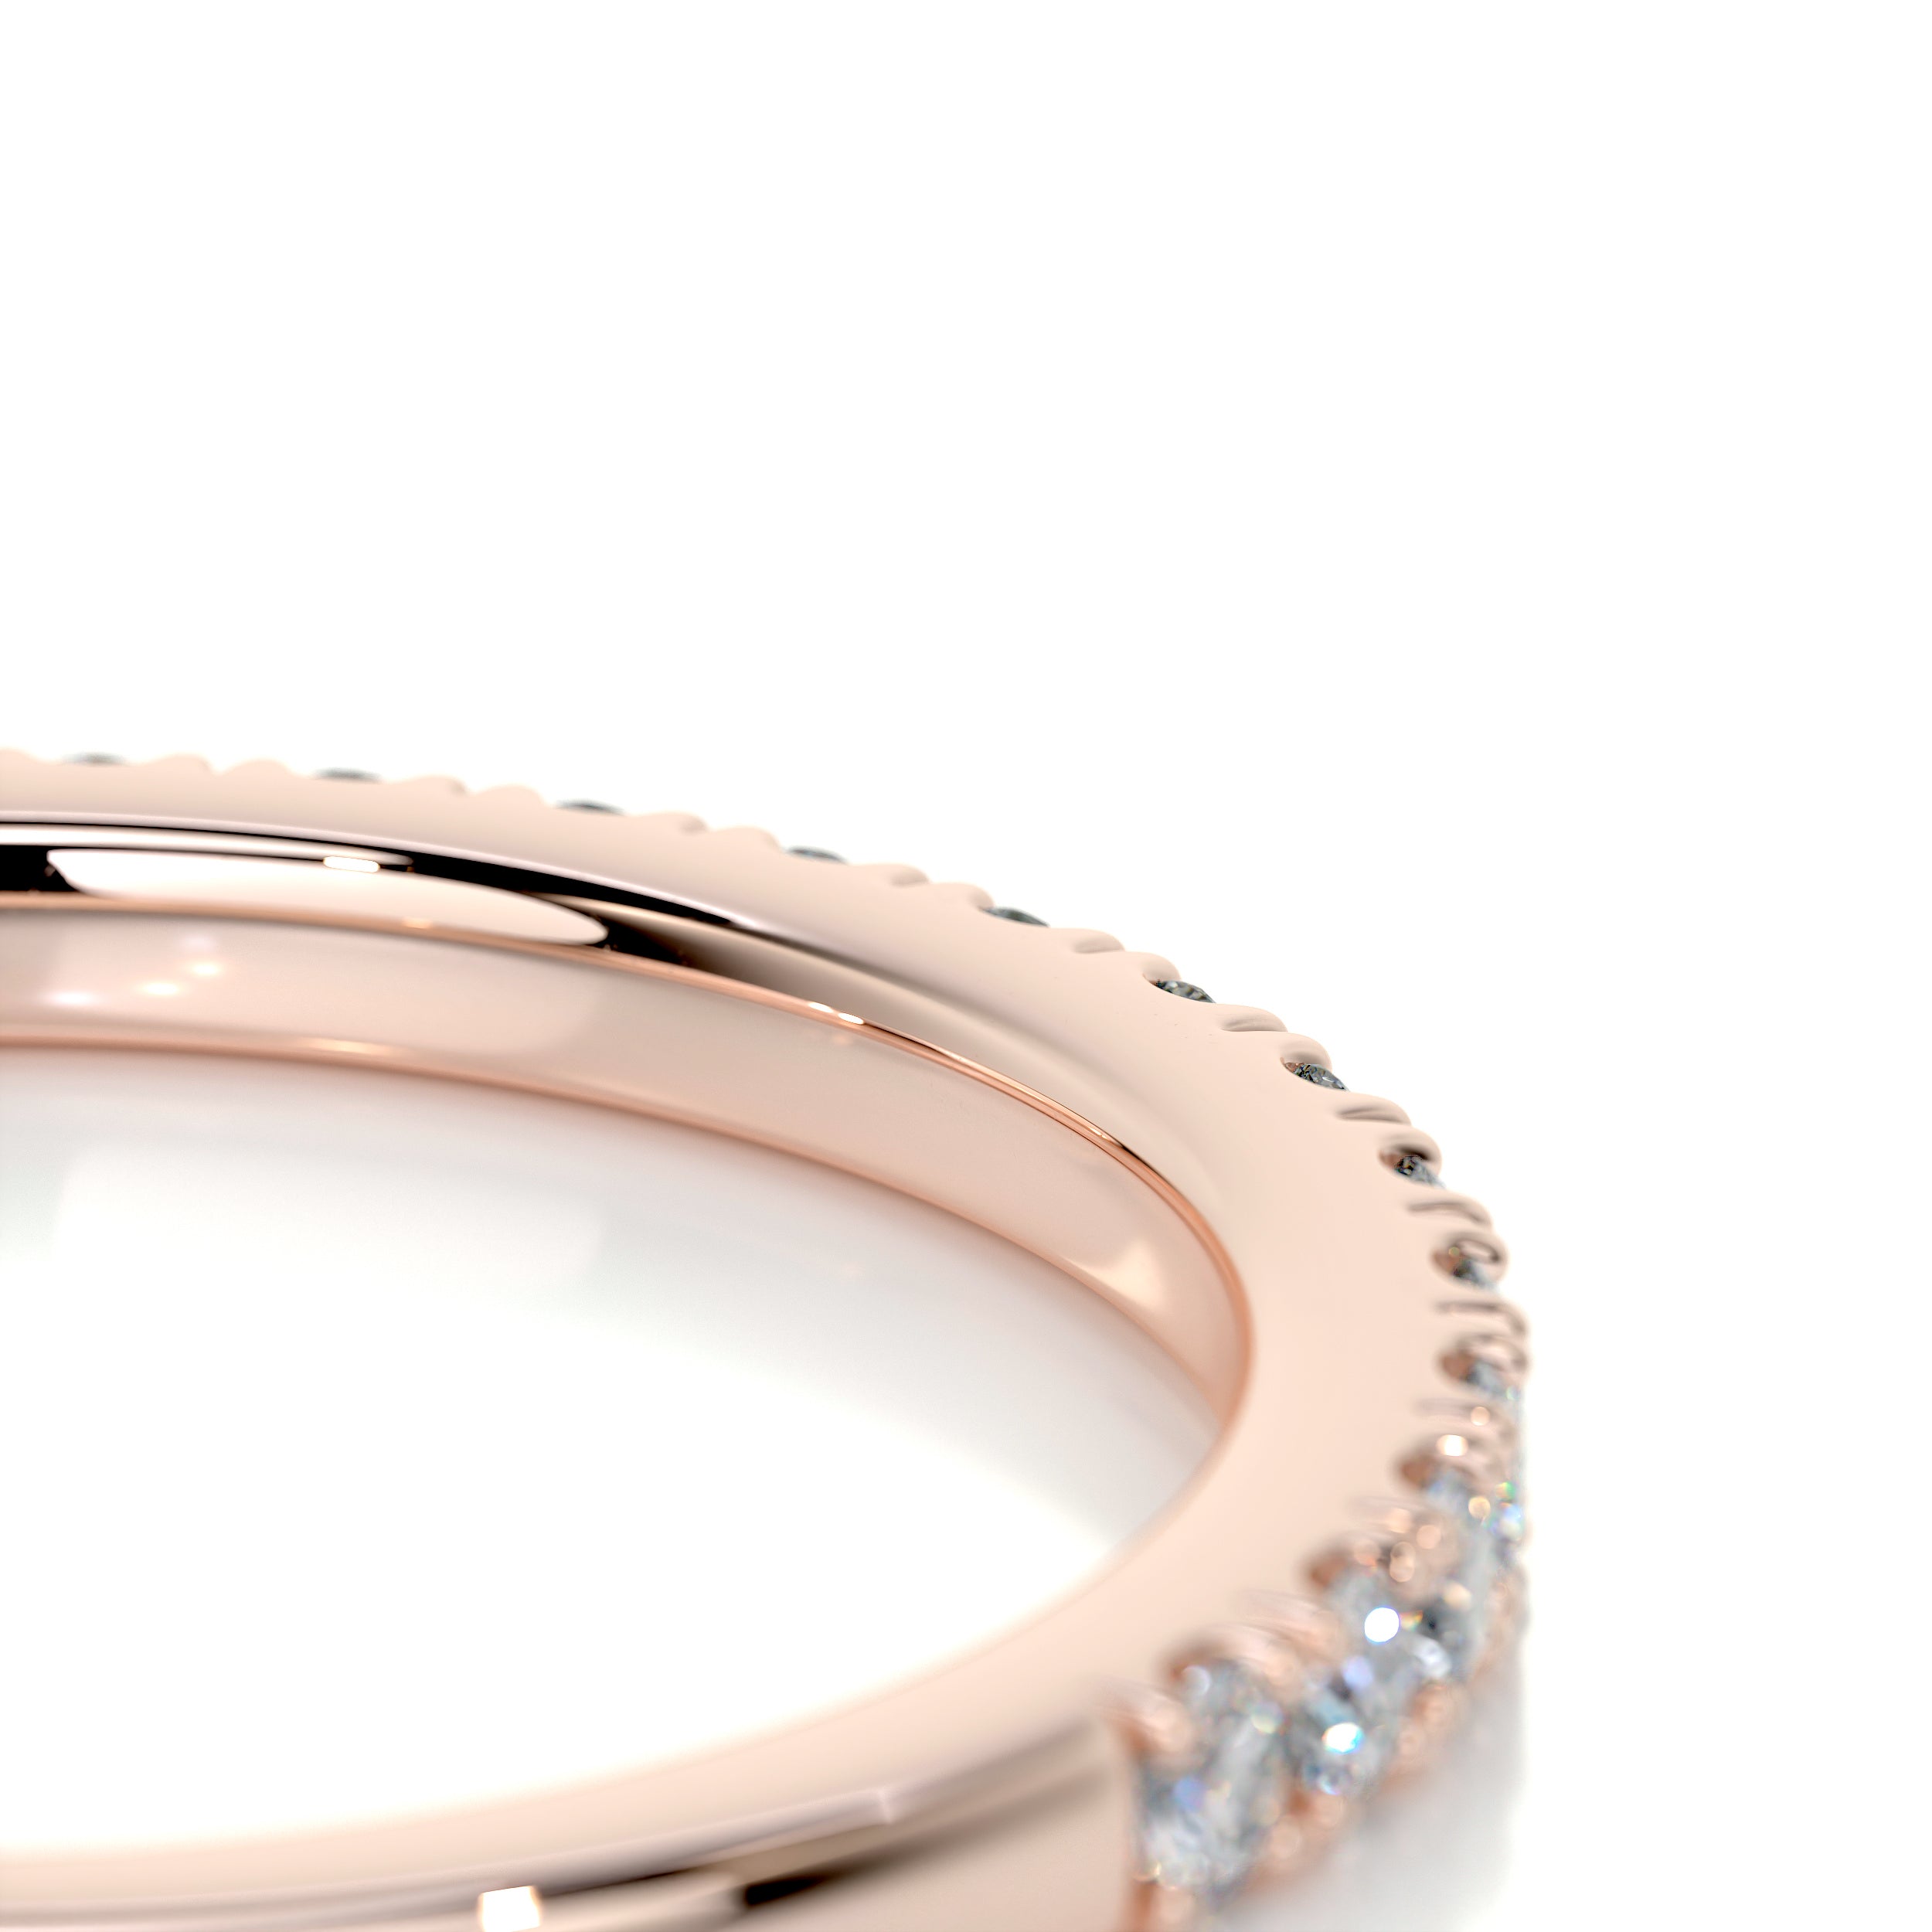 Stephanie Diamond Wedding Ring   (0.3 Carat) - 14K Rose Gold